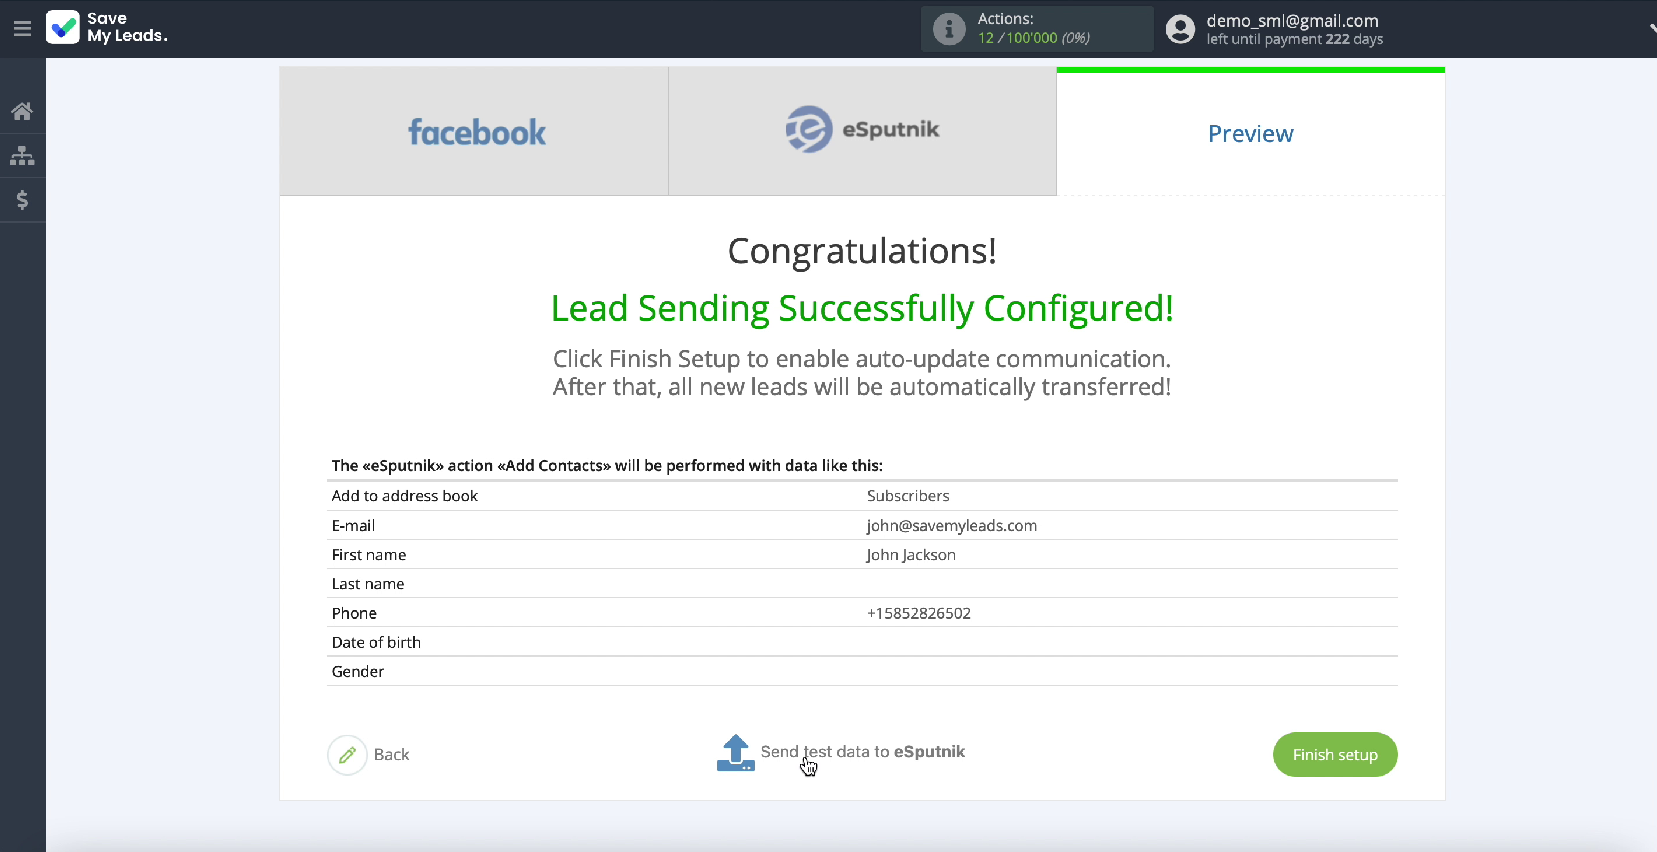 How to Send E-Mail via eSputnik from New Facebook Leads | Send test data